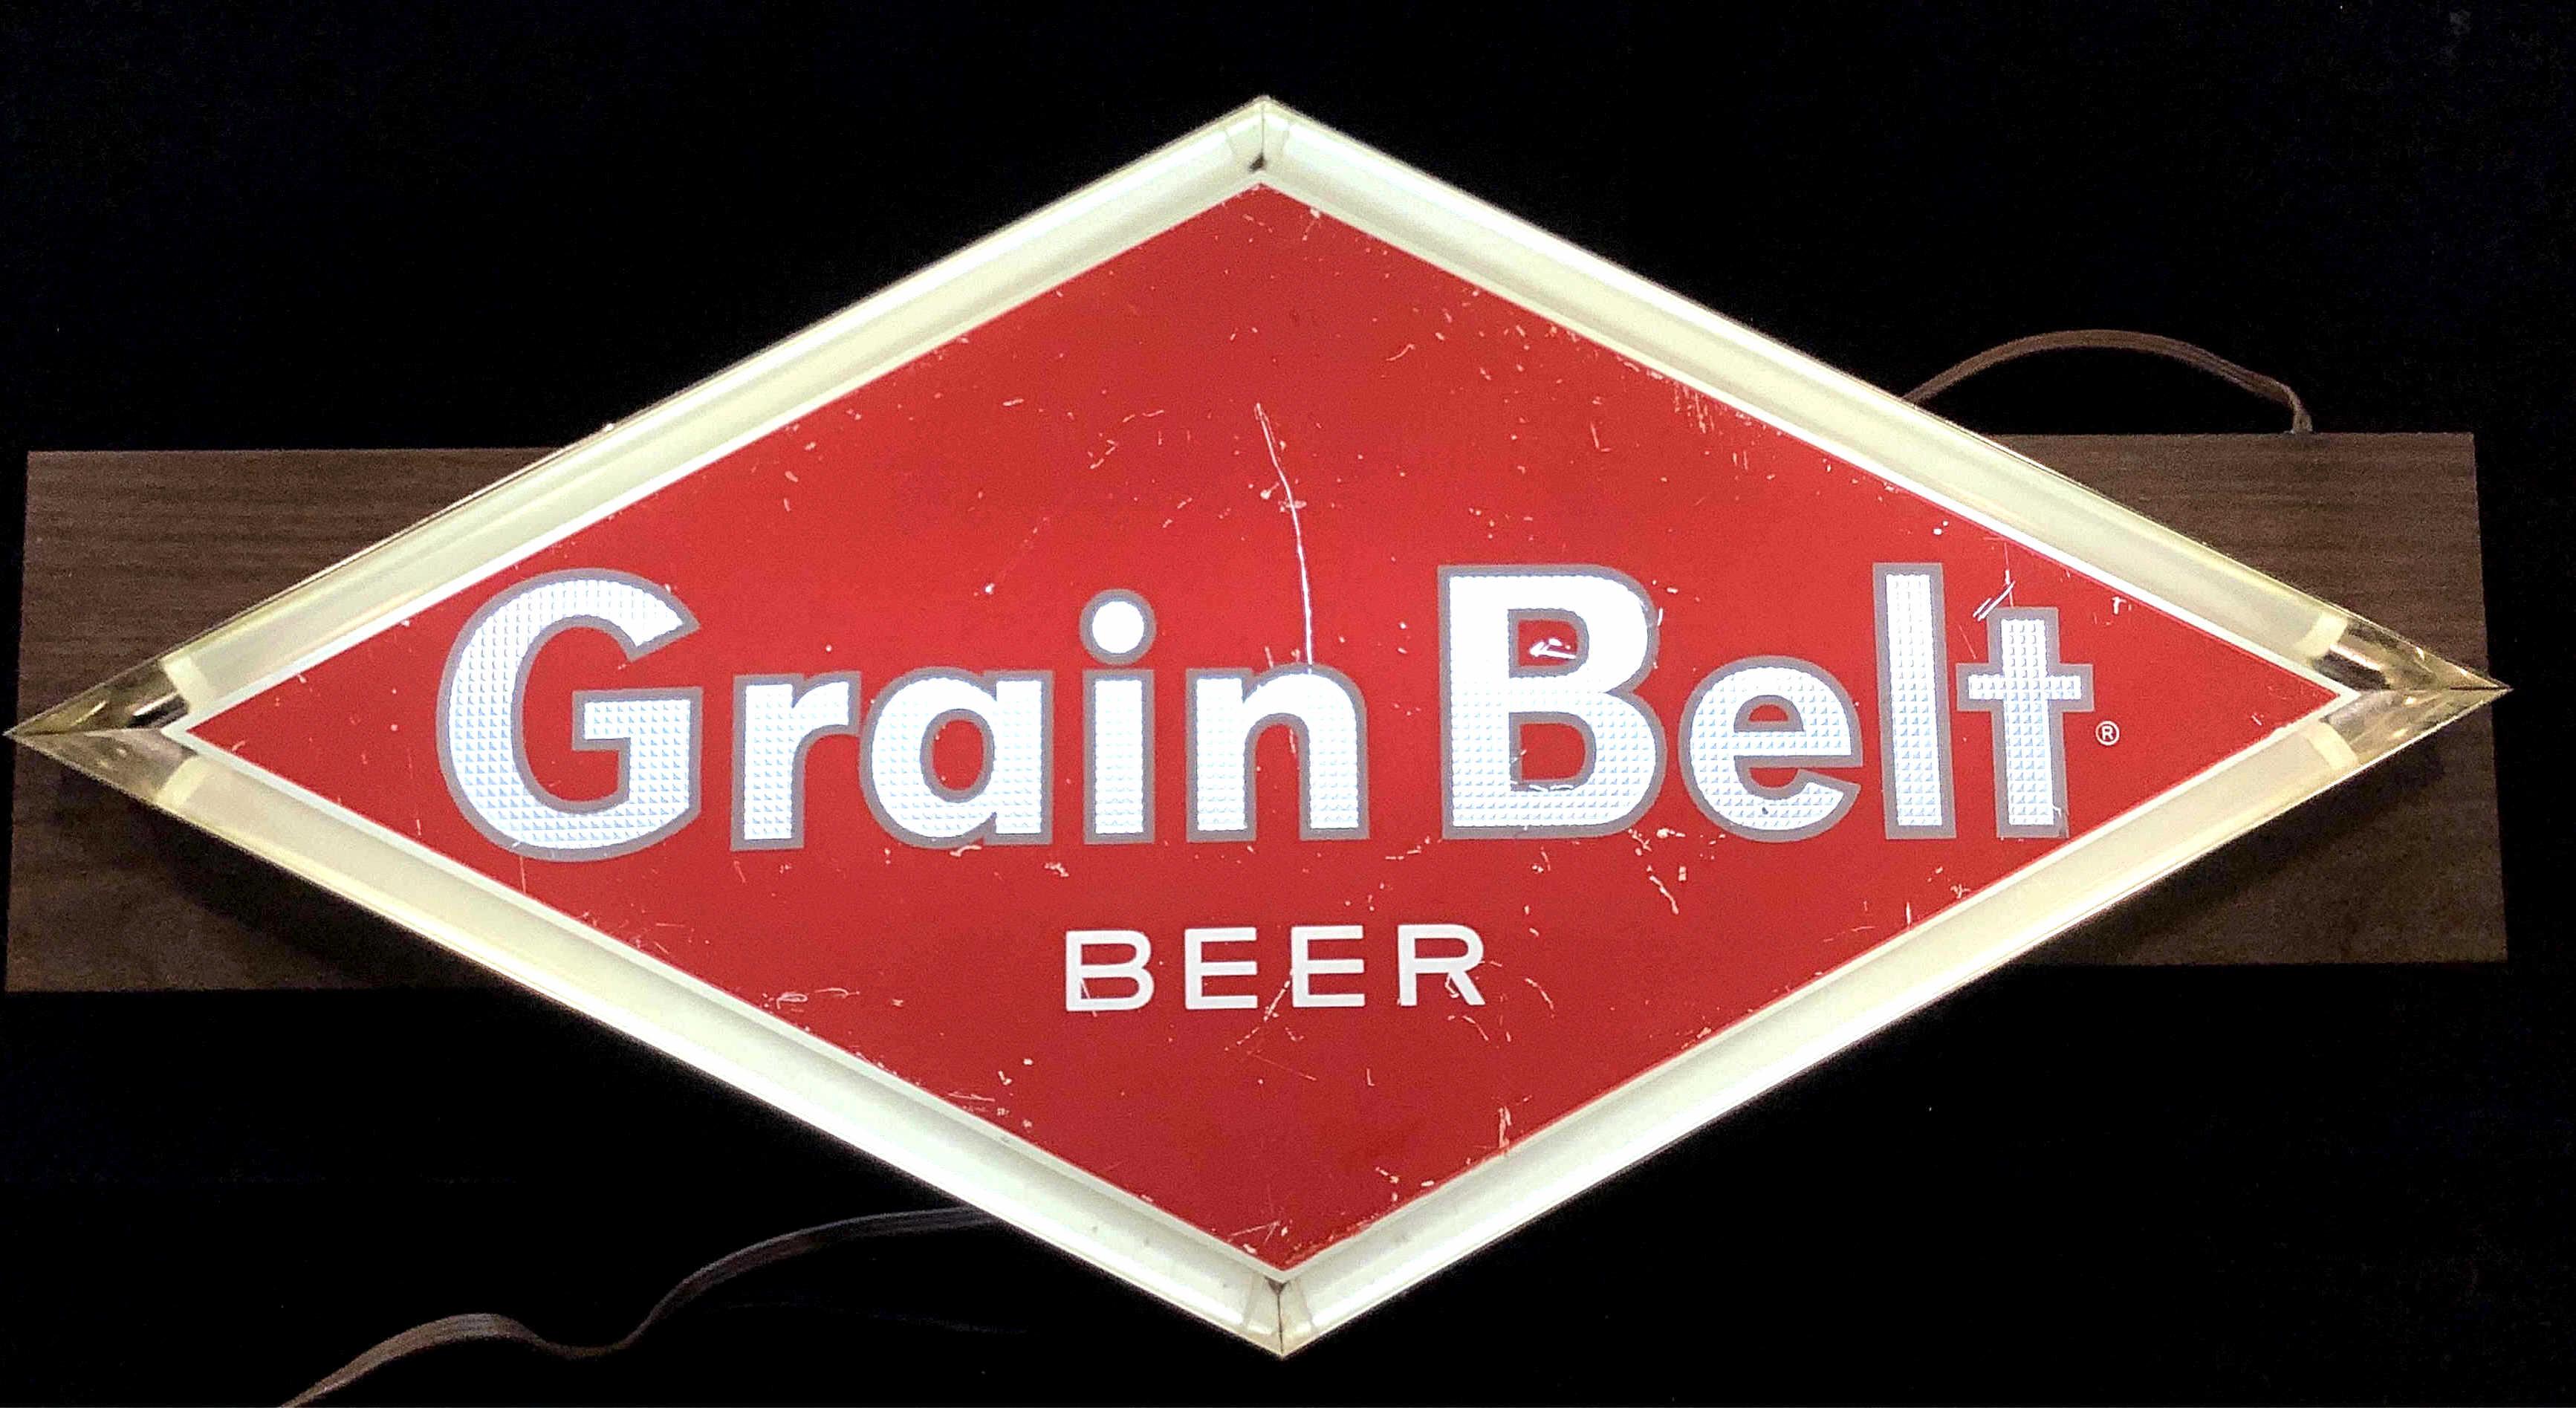 Vintage Grain Beer Advertising Illuminated Bar Sign